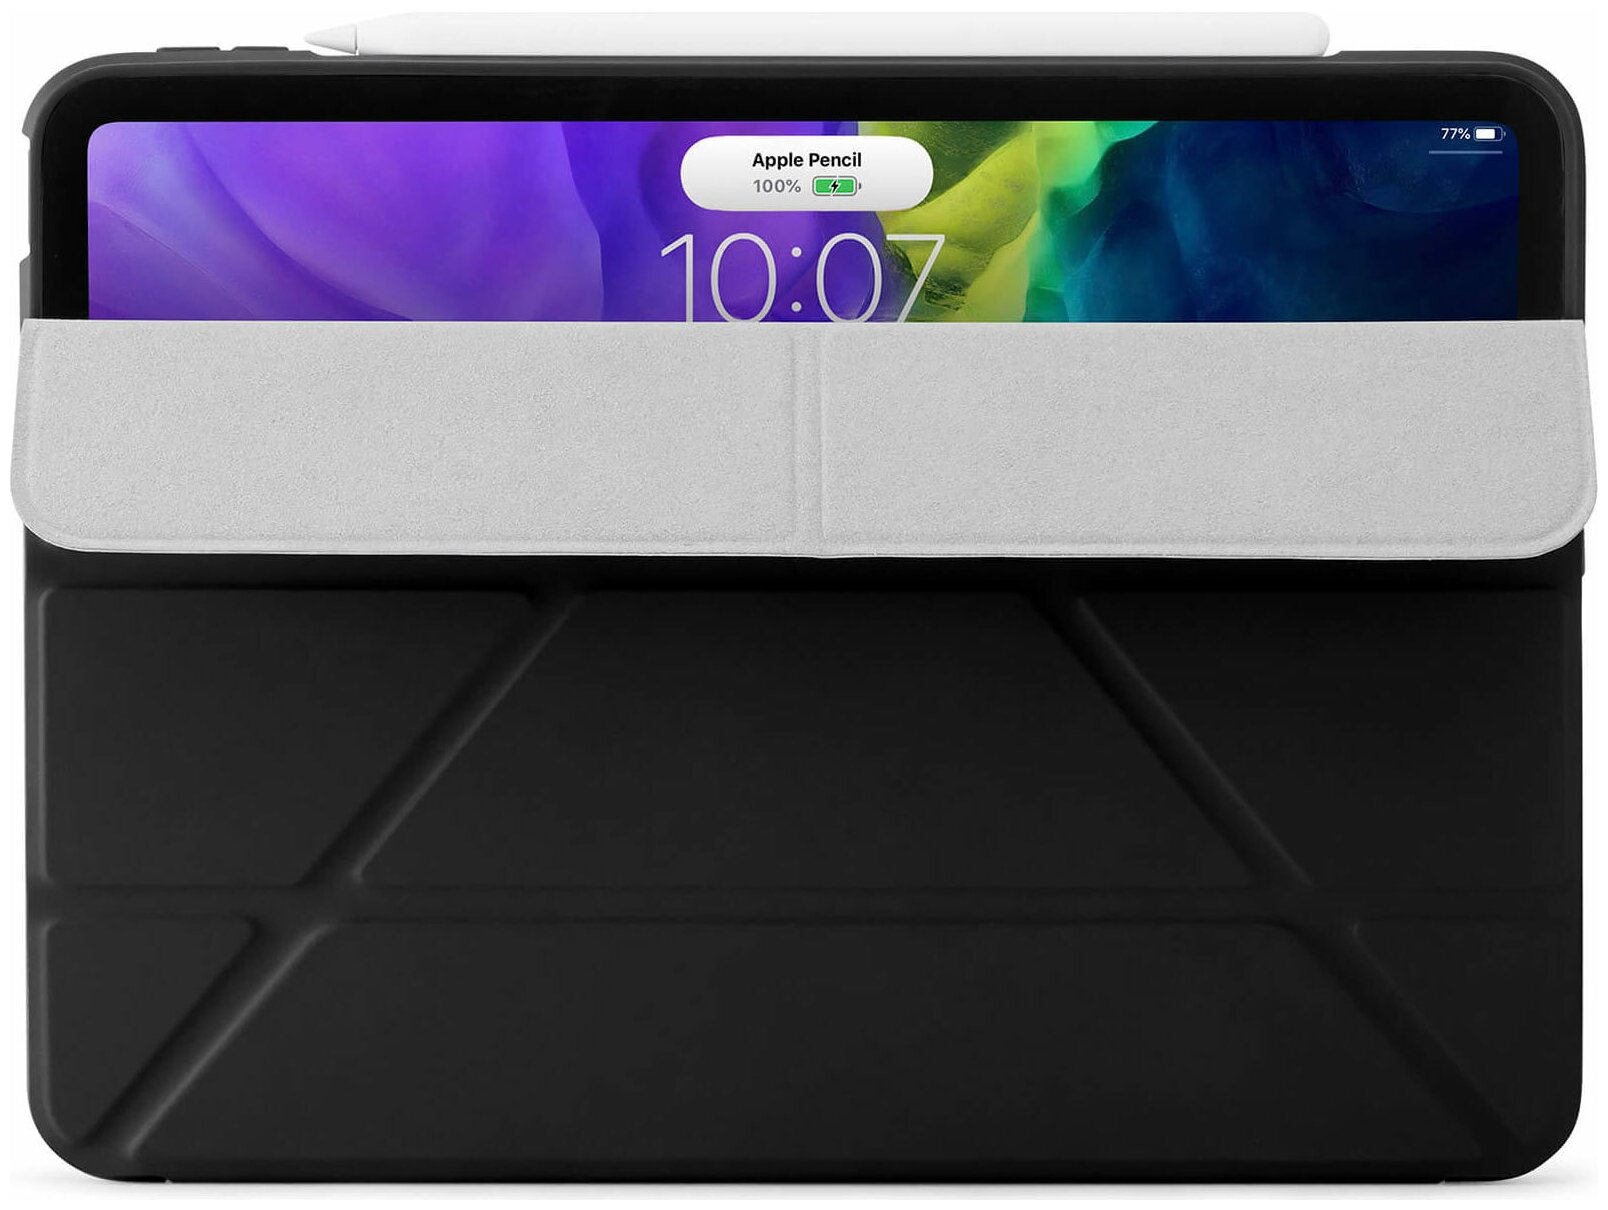 Чехол Pipetto для iPad Air 109 (2020) Origami Pencil Case черный (P048-49-Q)